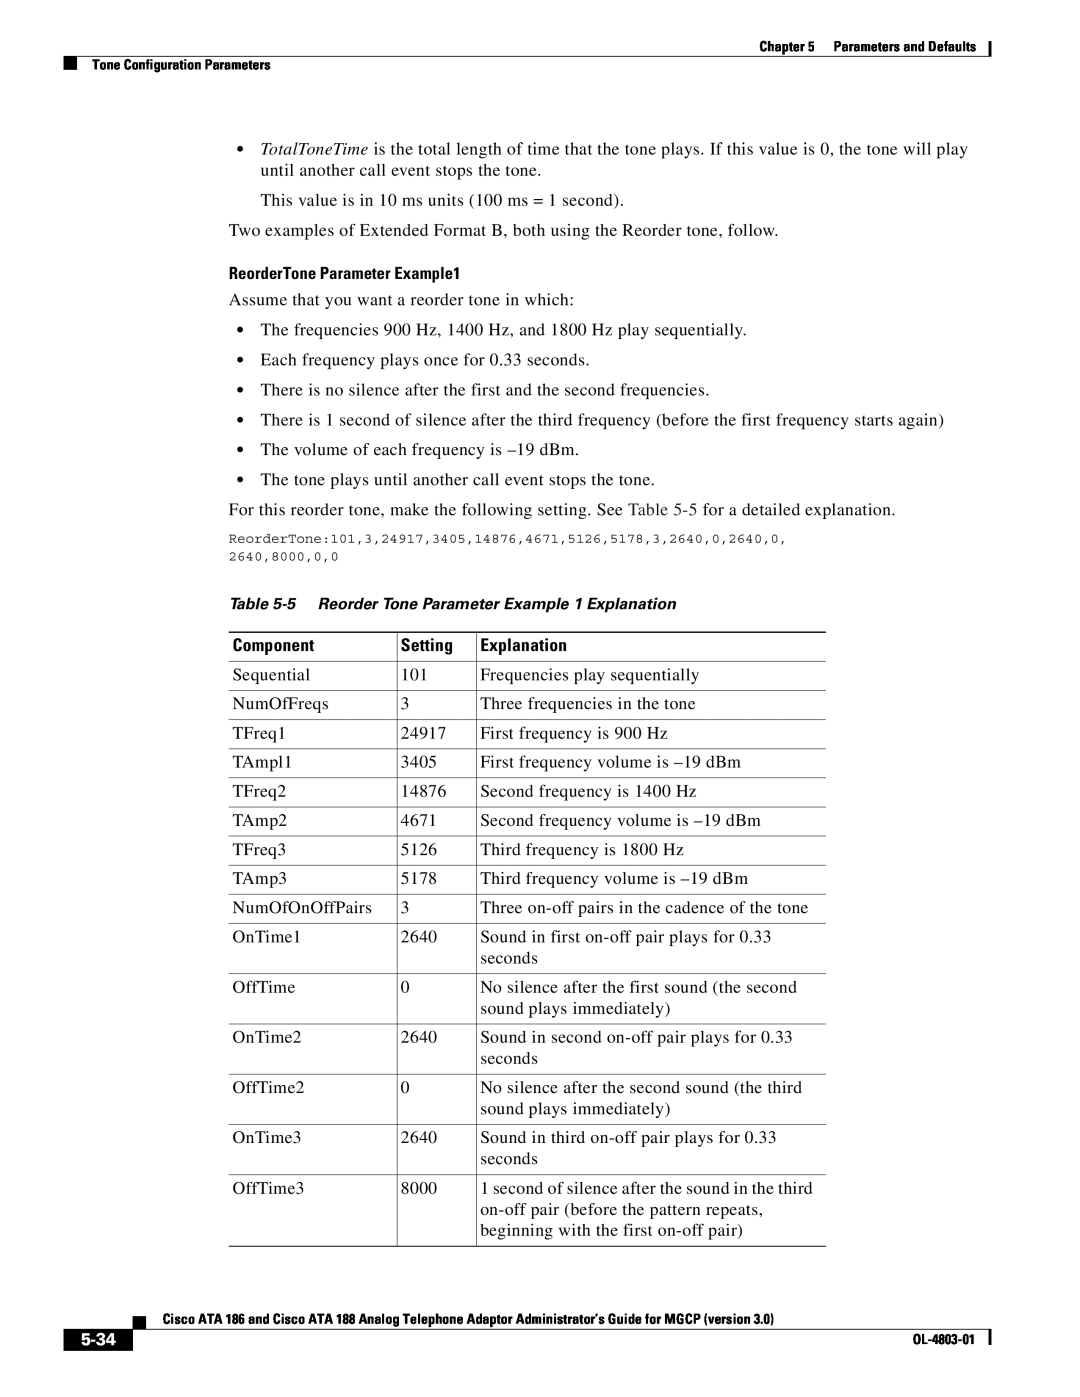 Cisco Systems ATA 186 manual ReorderTone Parameter Example1, Component, Setting, Explanation, 5-34 